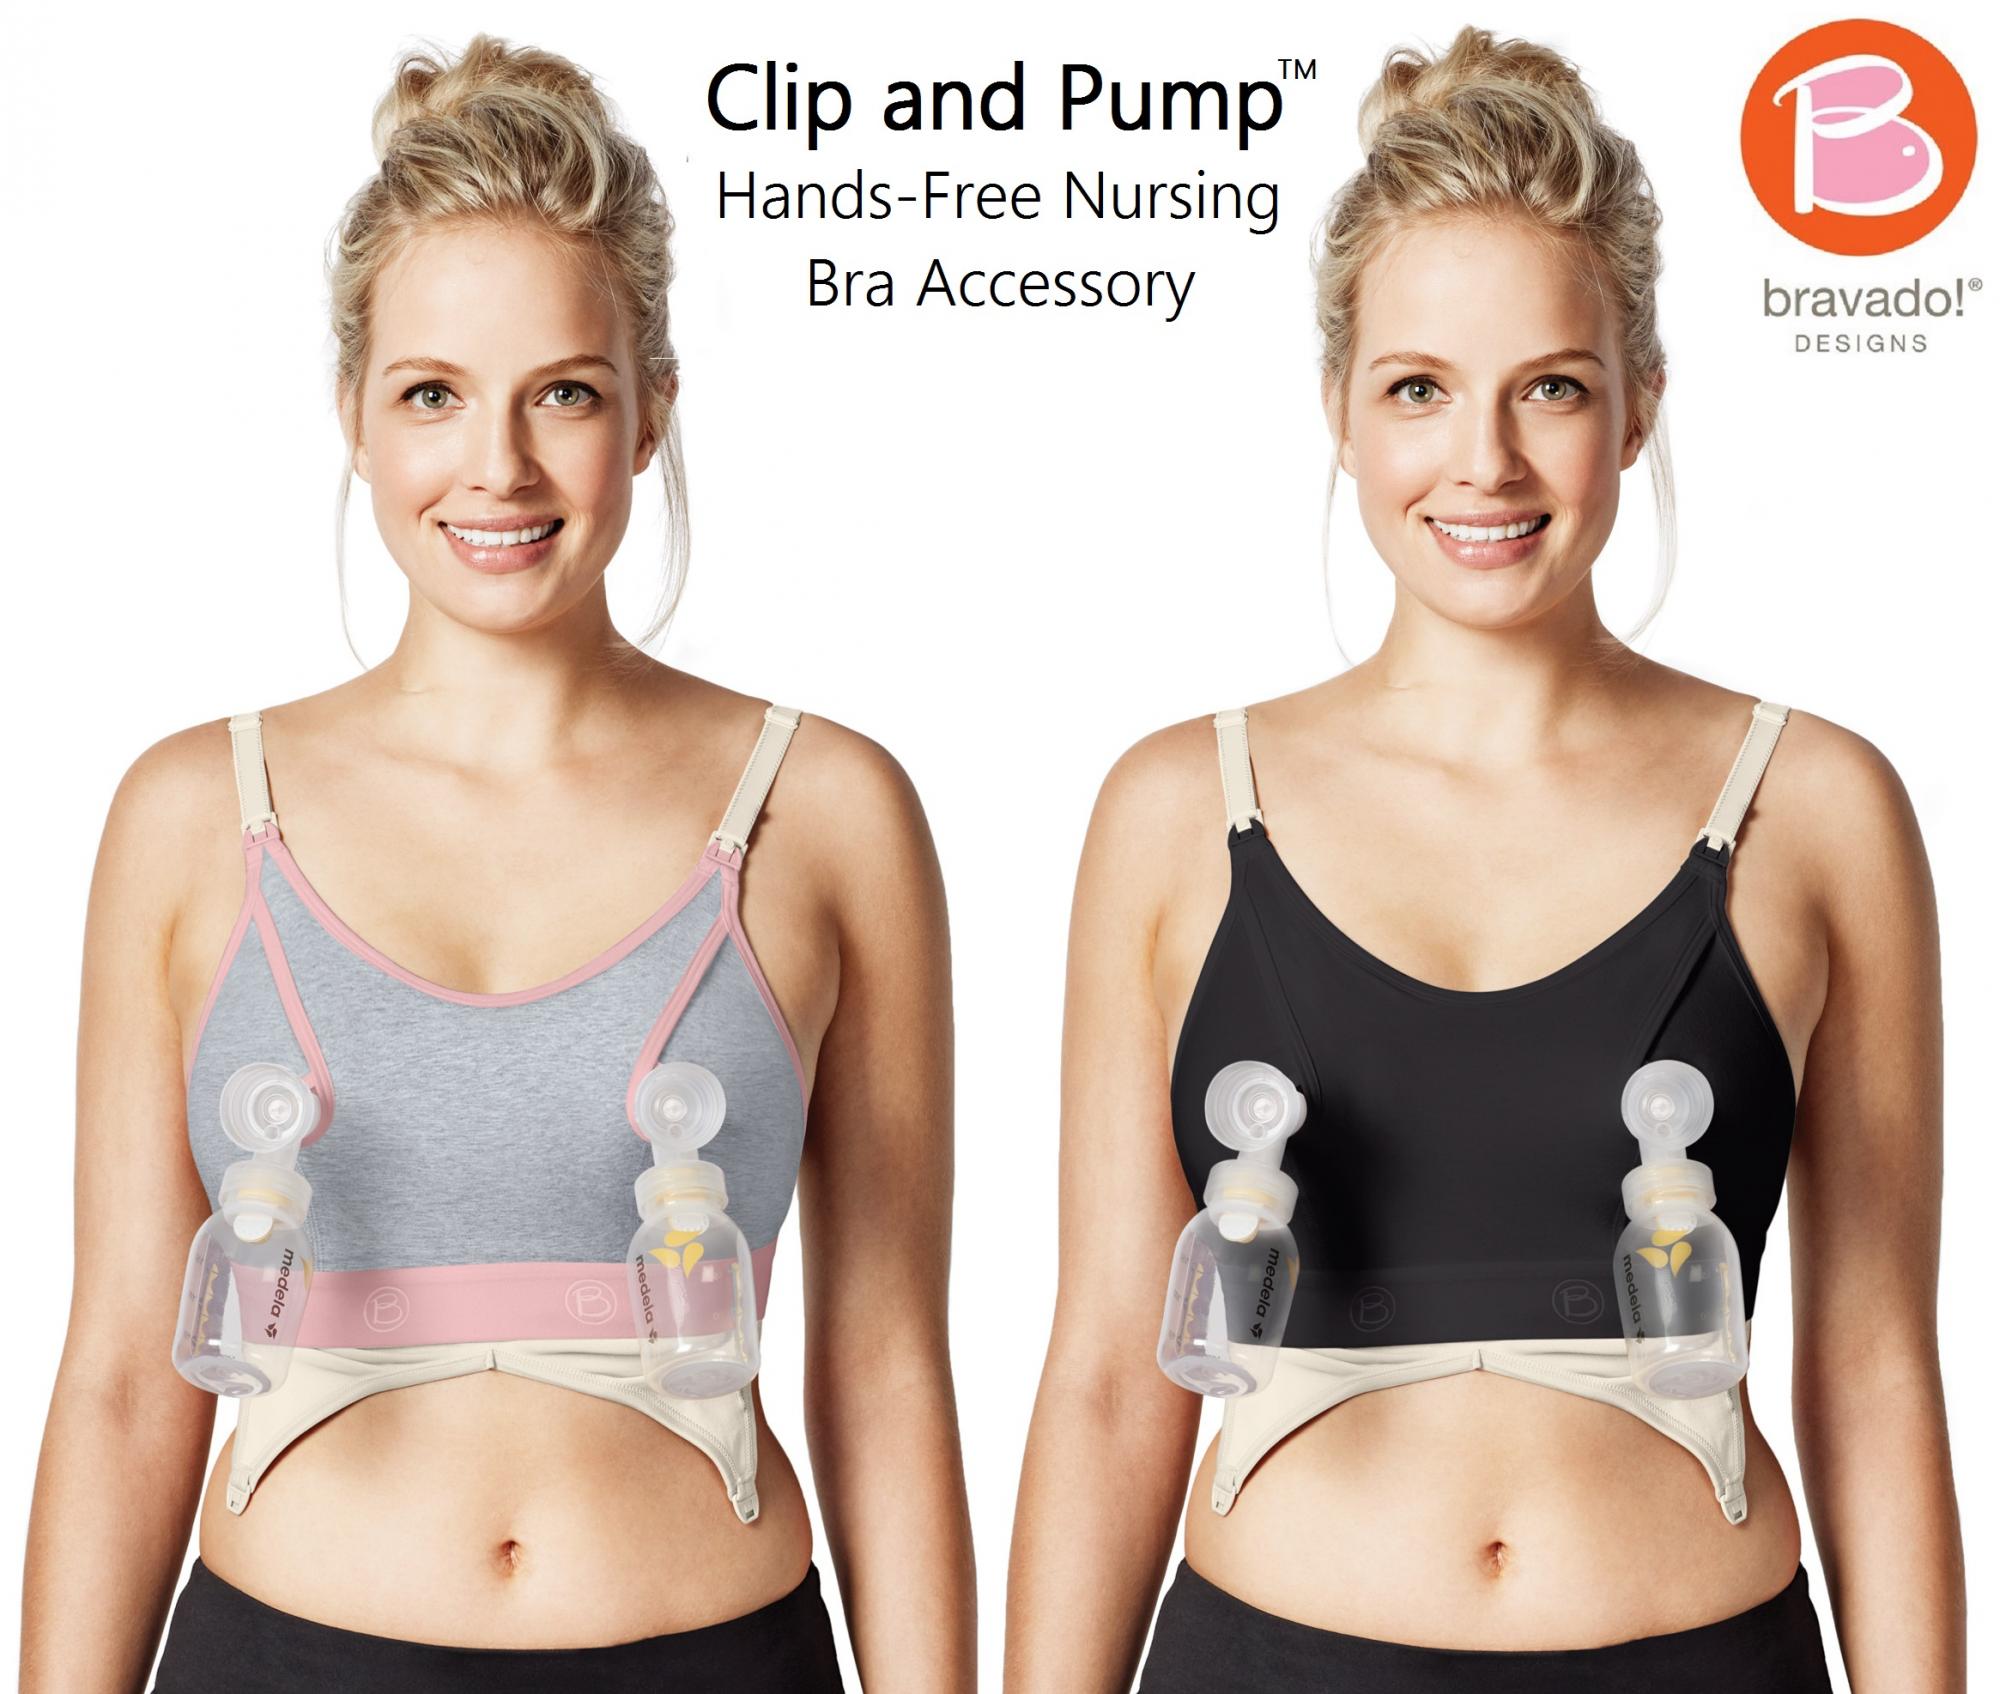 Bravado Designs Clip and Pump™ Hands-Free Nursing Bra Accessory 9301VBA